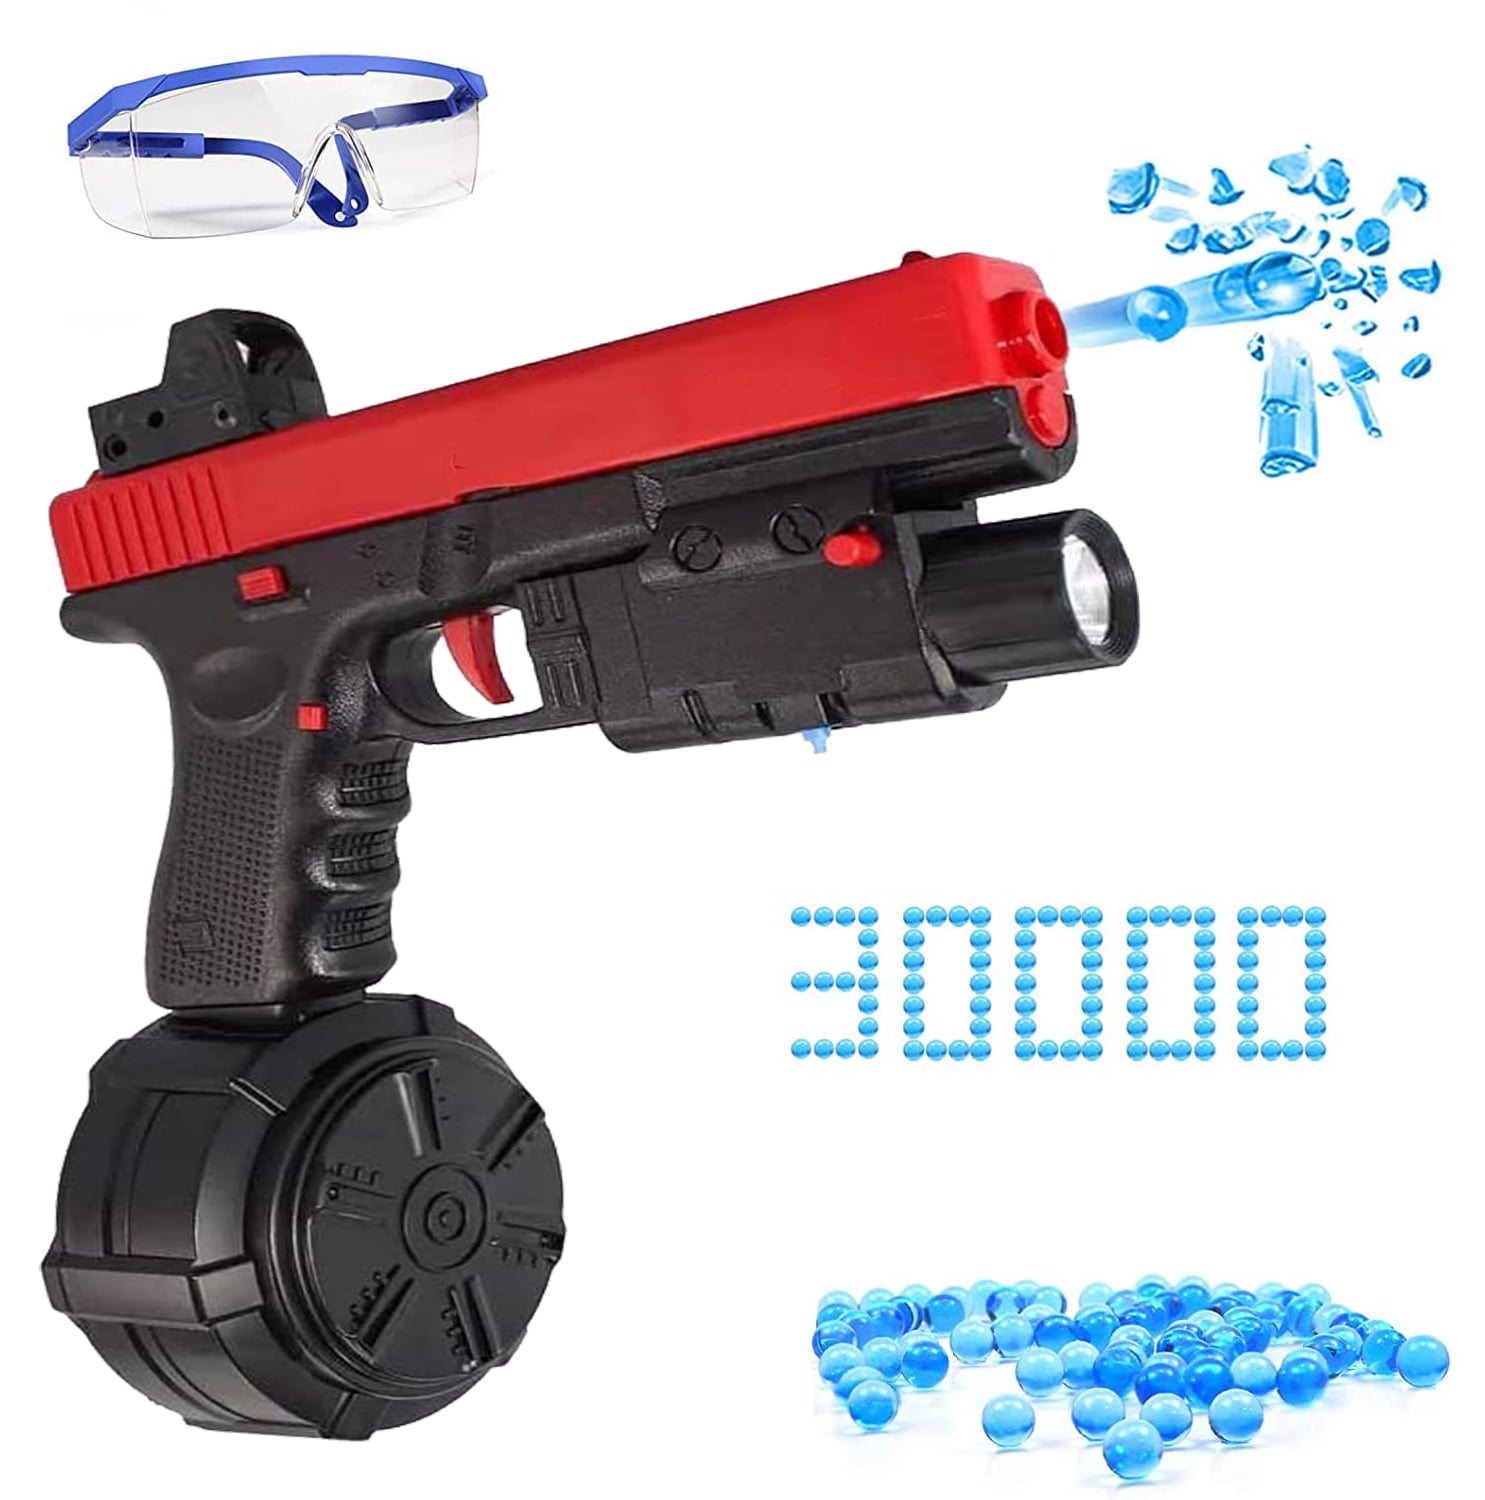 Splatter Ball Gun,Gel Blaster Gun Automatic with Goggles and 30000